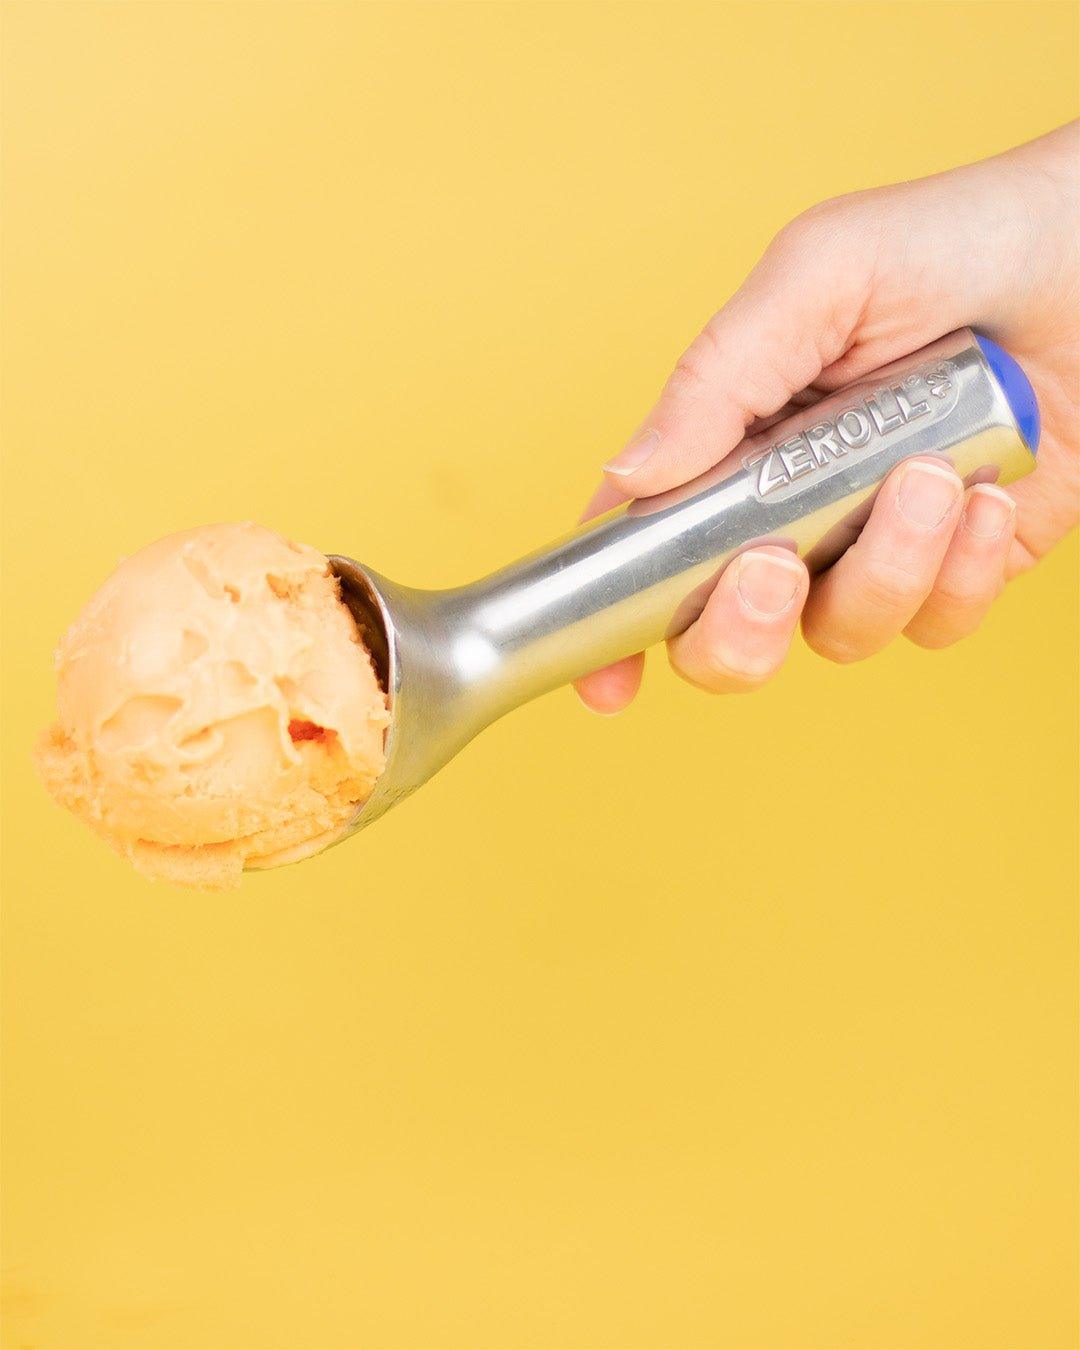 ZeRoll Ice Cream Scooper Model 1012 (3 oz) (Pack of 3) - 50212